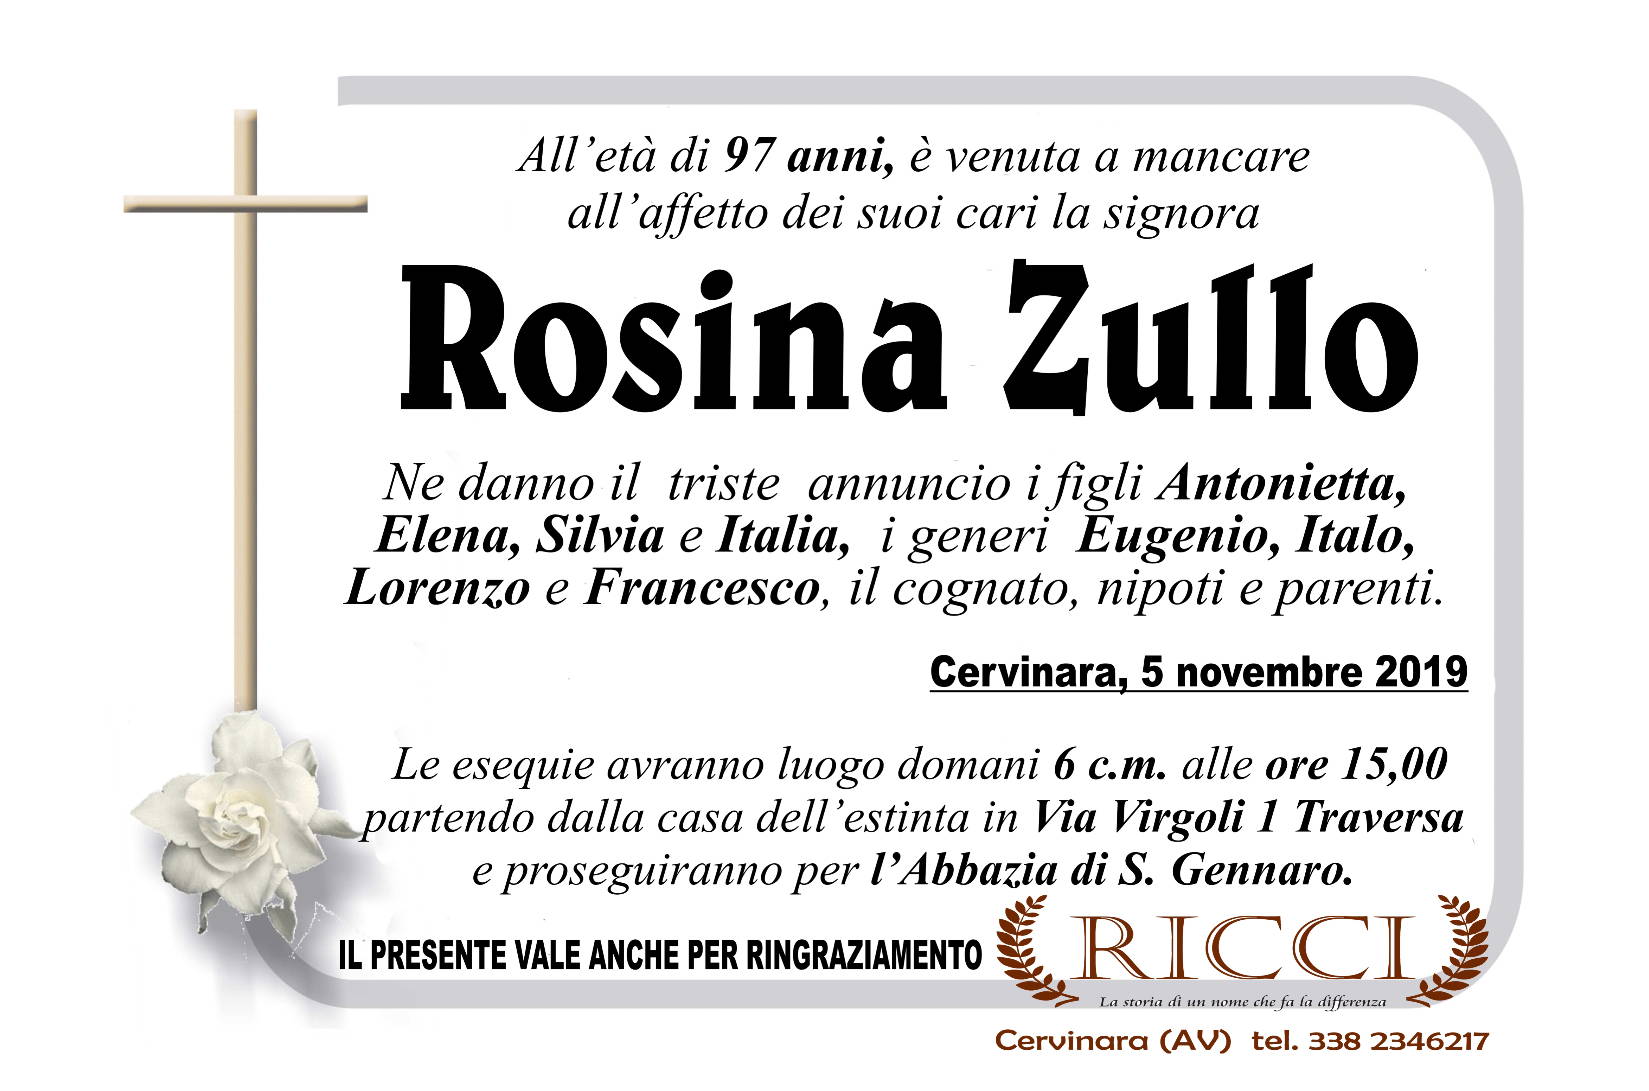 Rosina Zullo